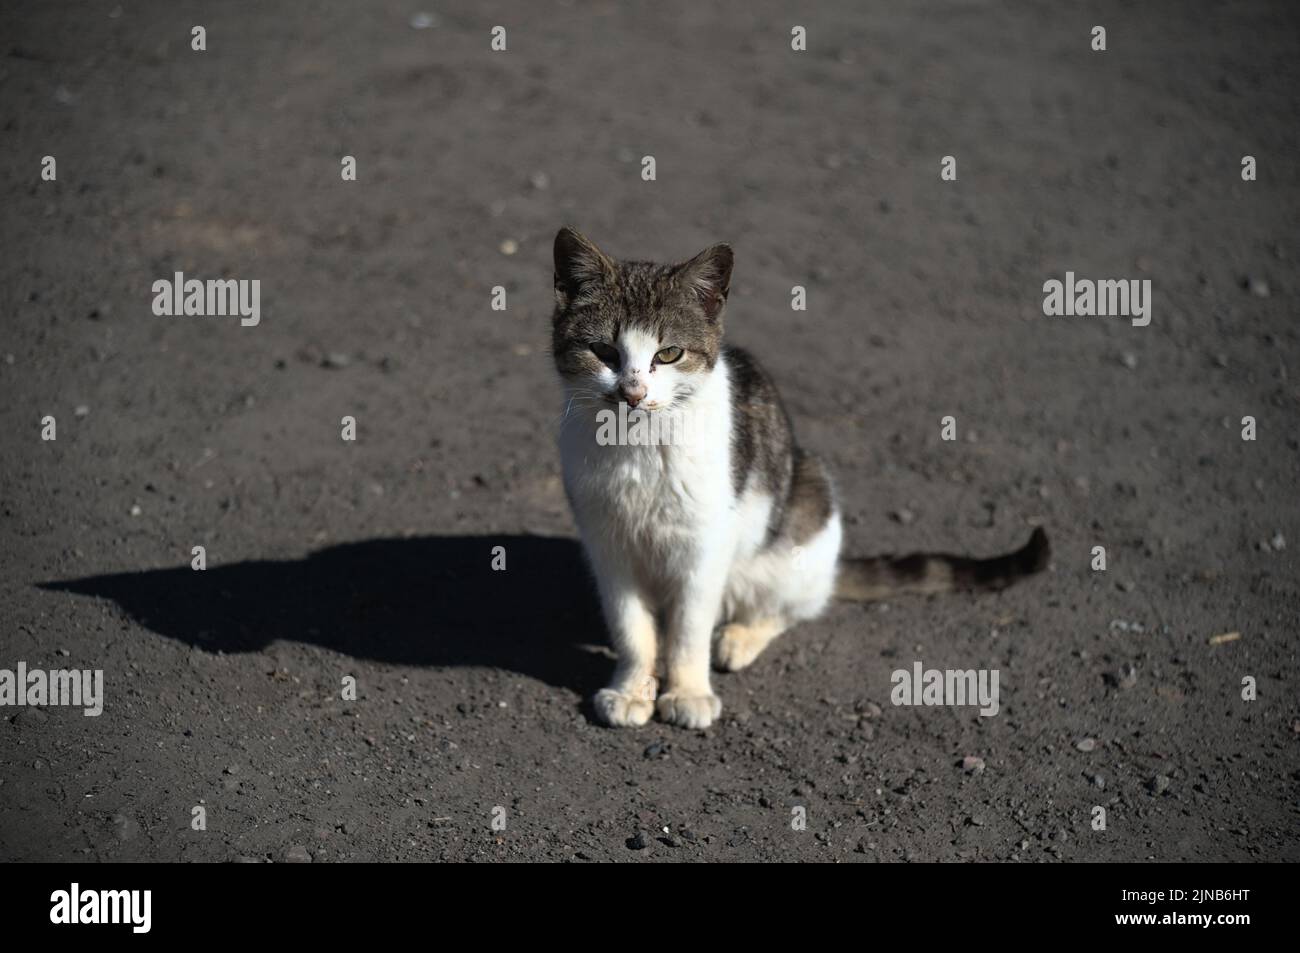 Dirty kitten on a ground Stock Photo